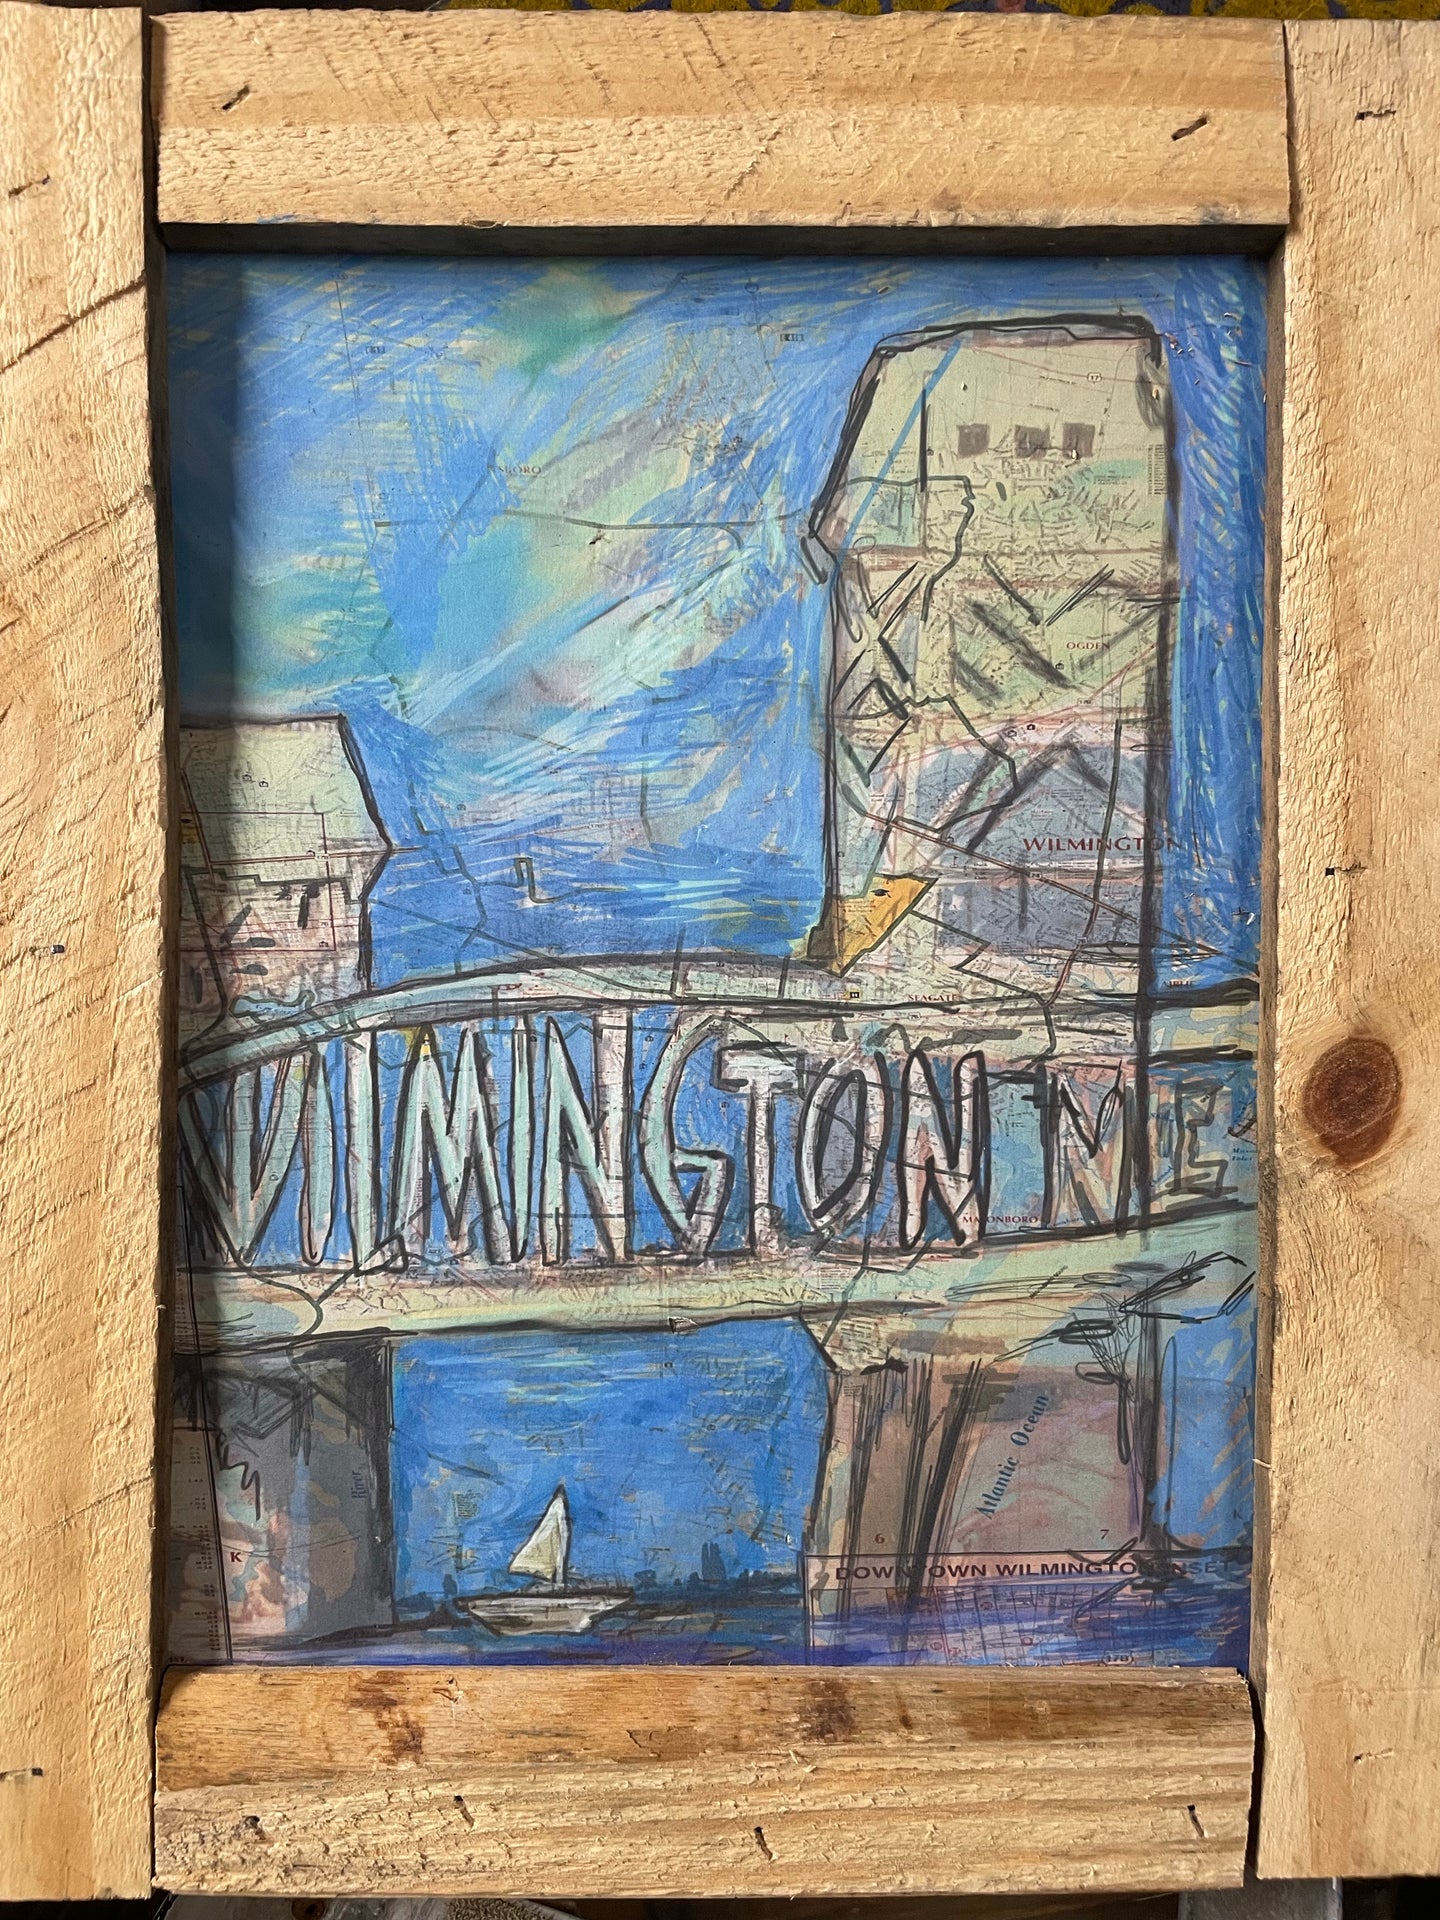 Wilmington Nc bridge art memorial